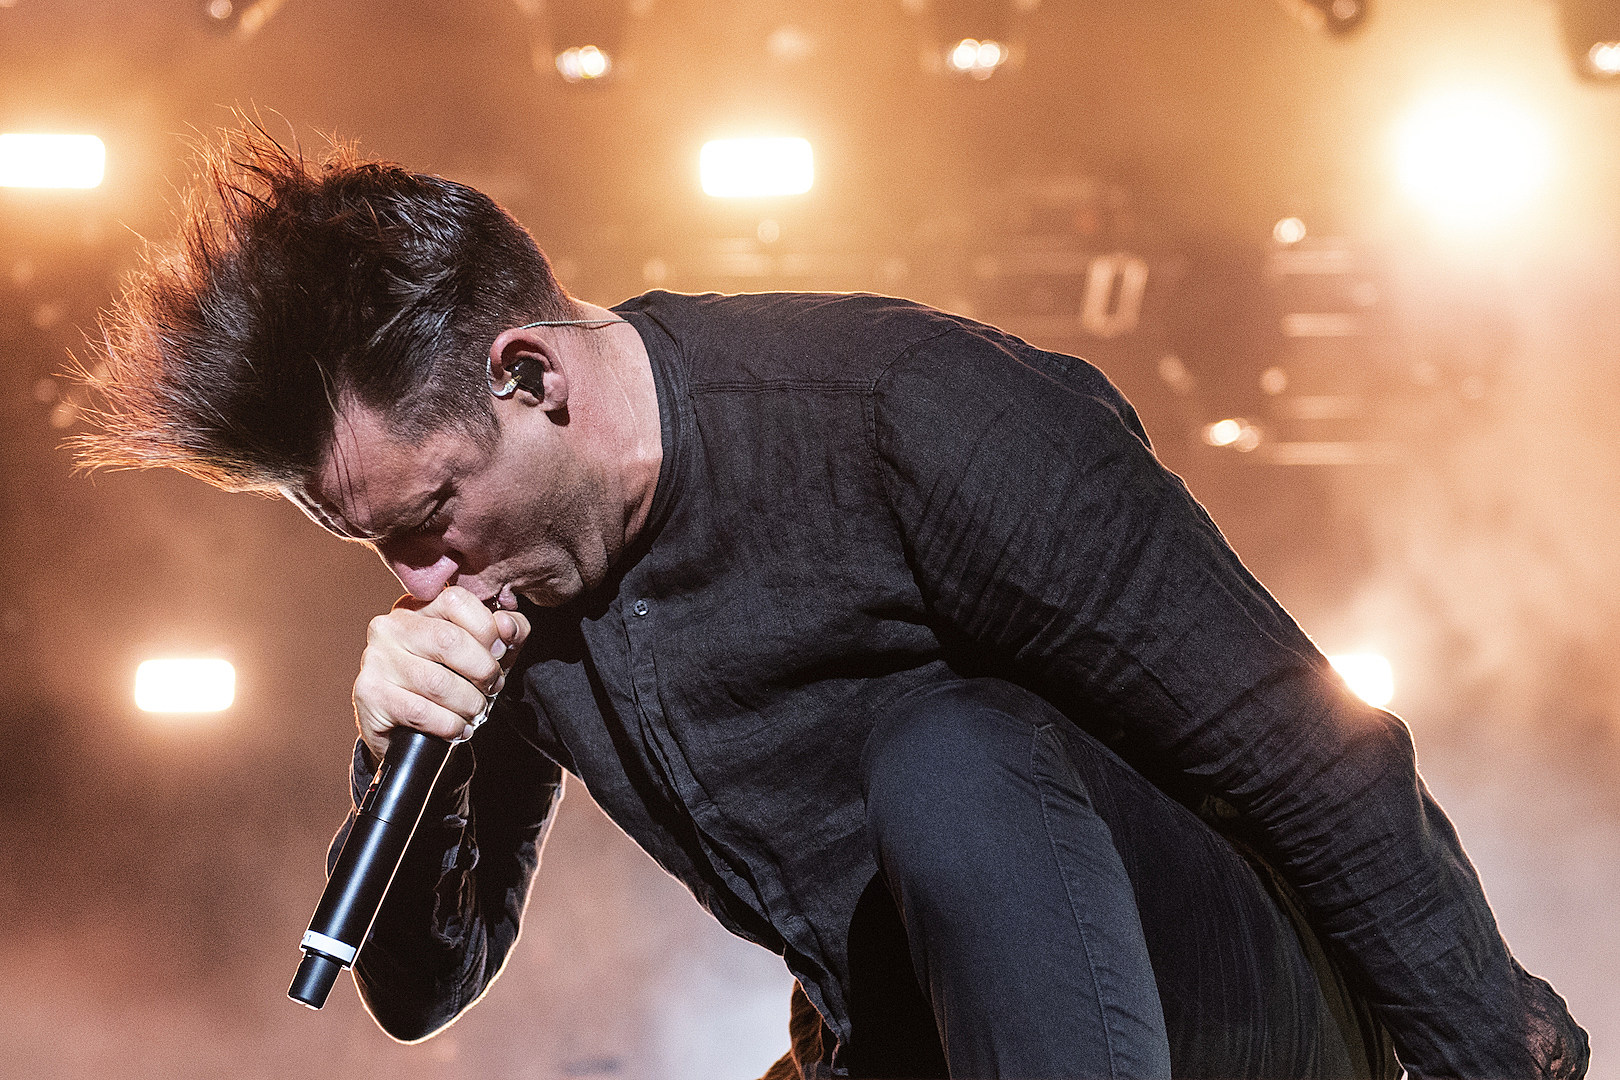 Parkway Drive Singer - 'Darker Still' 'Almost Broke' Band Dynamic